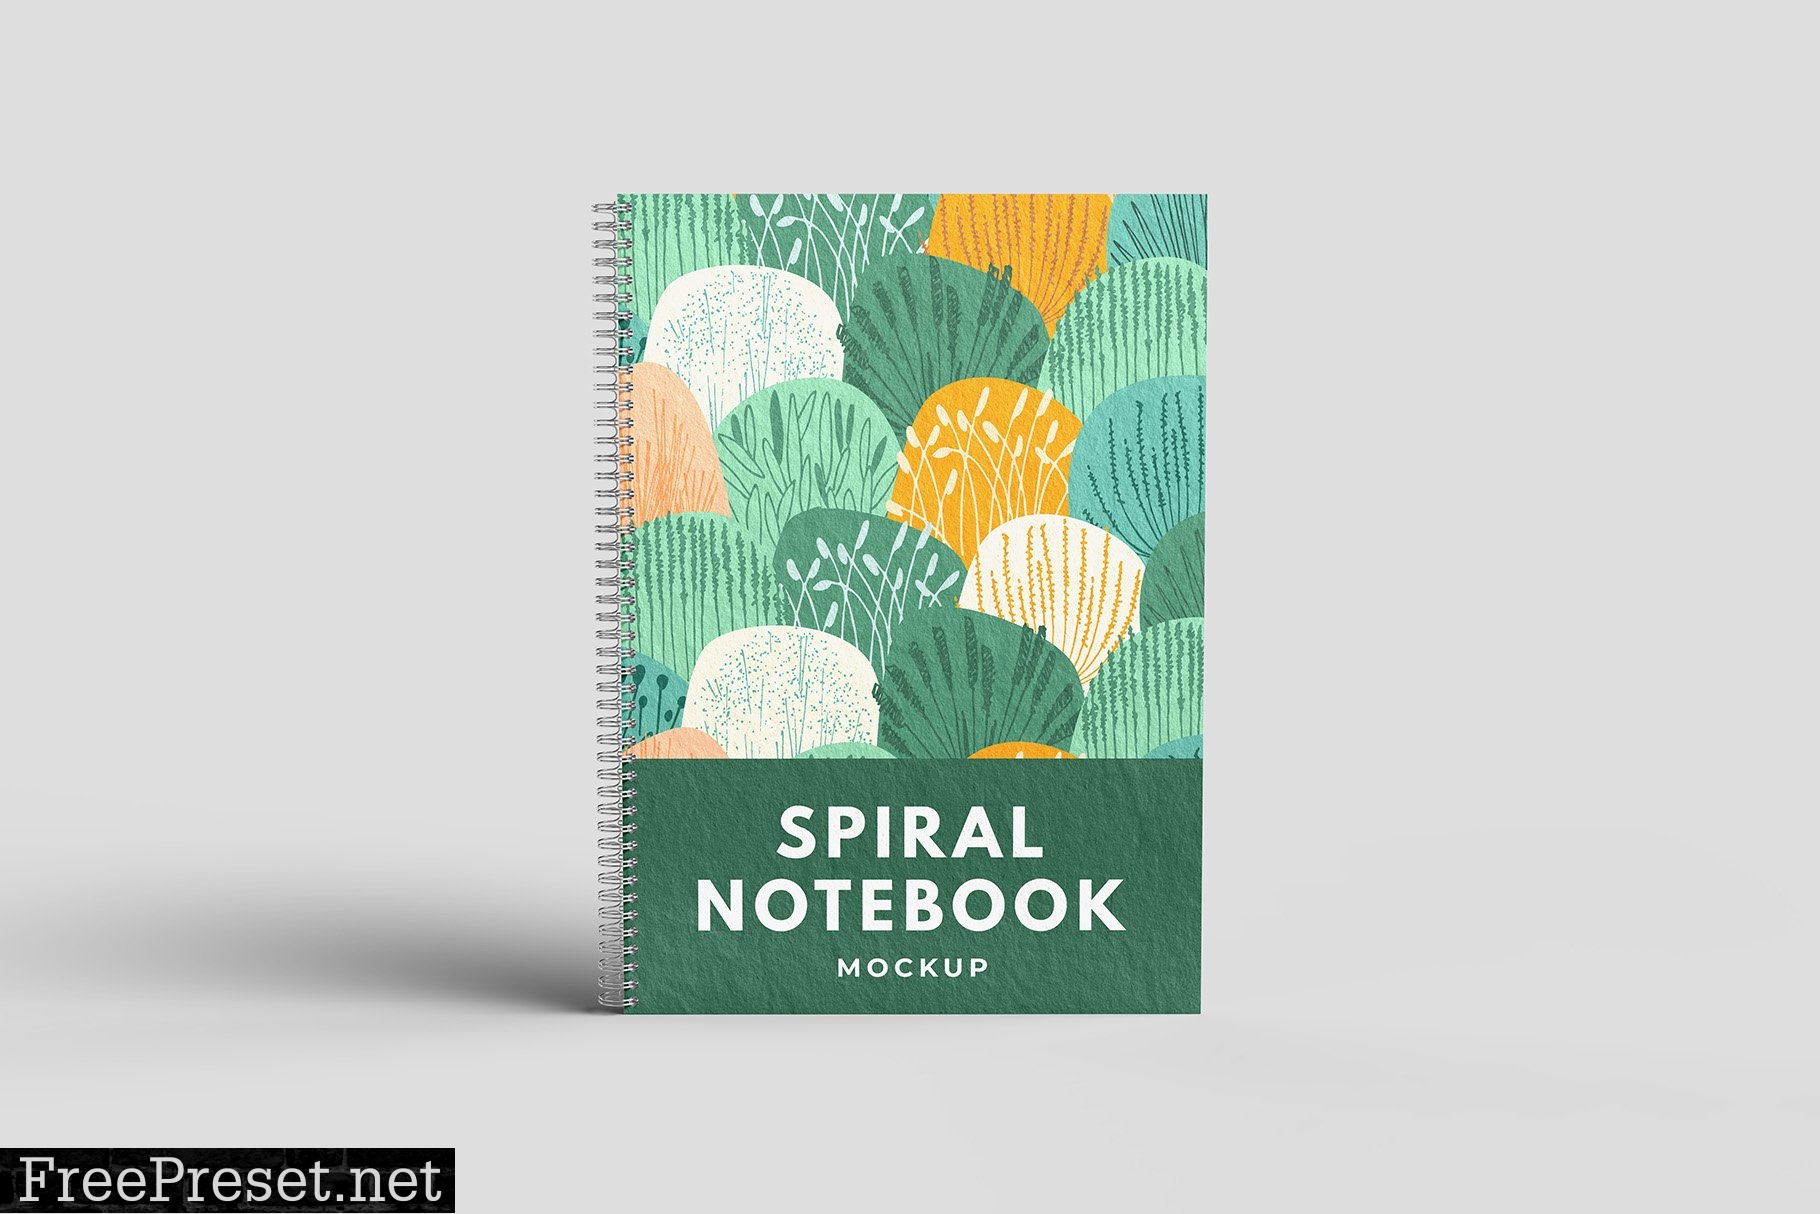 Spiral Notebook Mockup v2 - 8 views 7465931